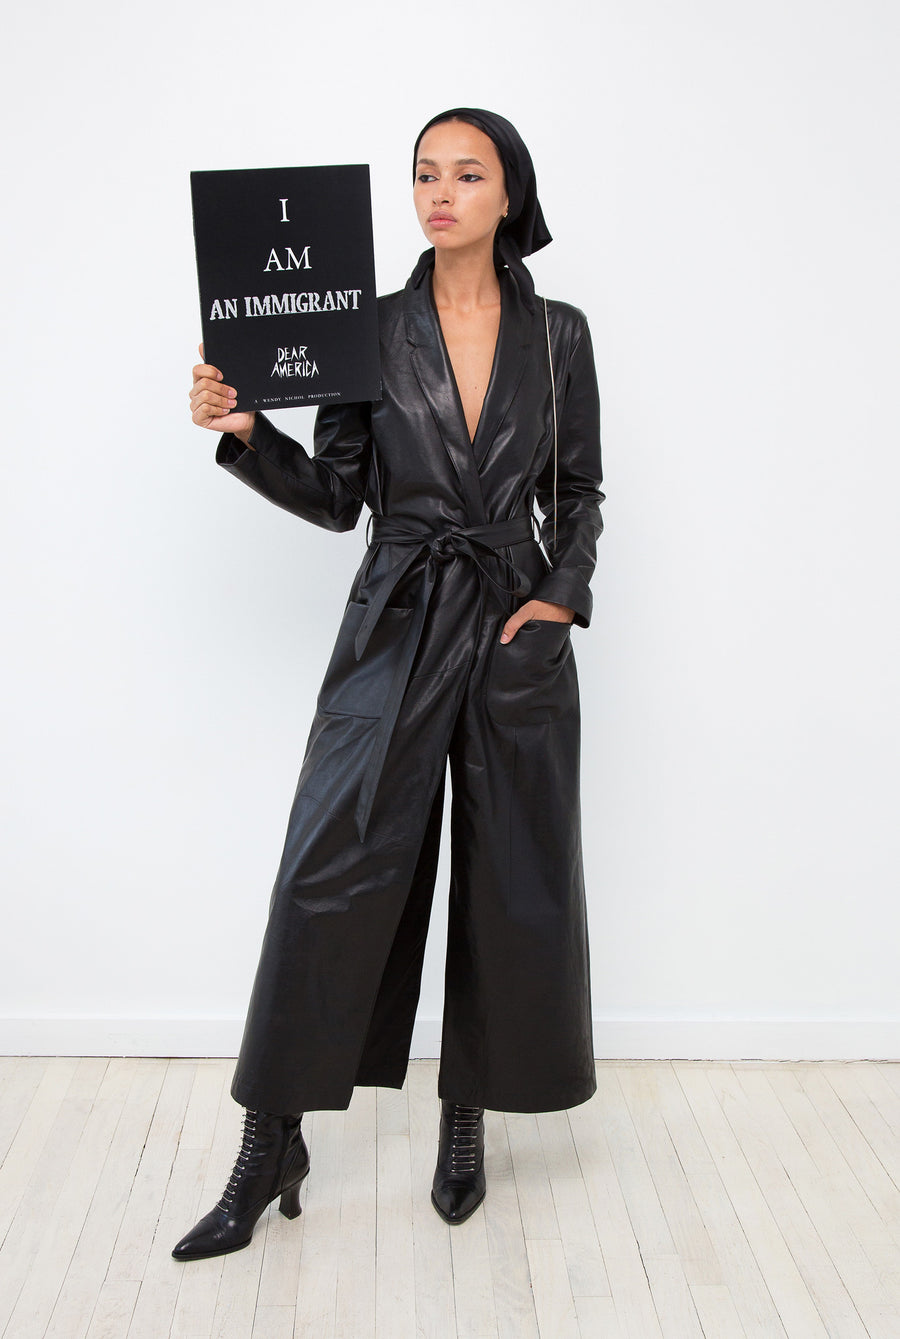 Camila IMG Model Wendy Nichol AW17 Clothing Fashion Anti Fascist Runway Show Dear America Handmade in NYC New York City Protest March I AM Thin Leather Duster Coat Jacket Matrix